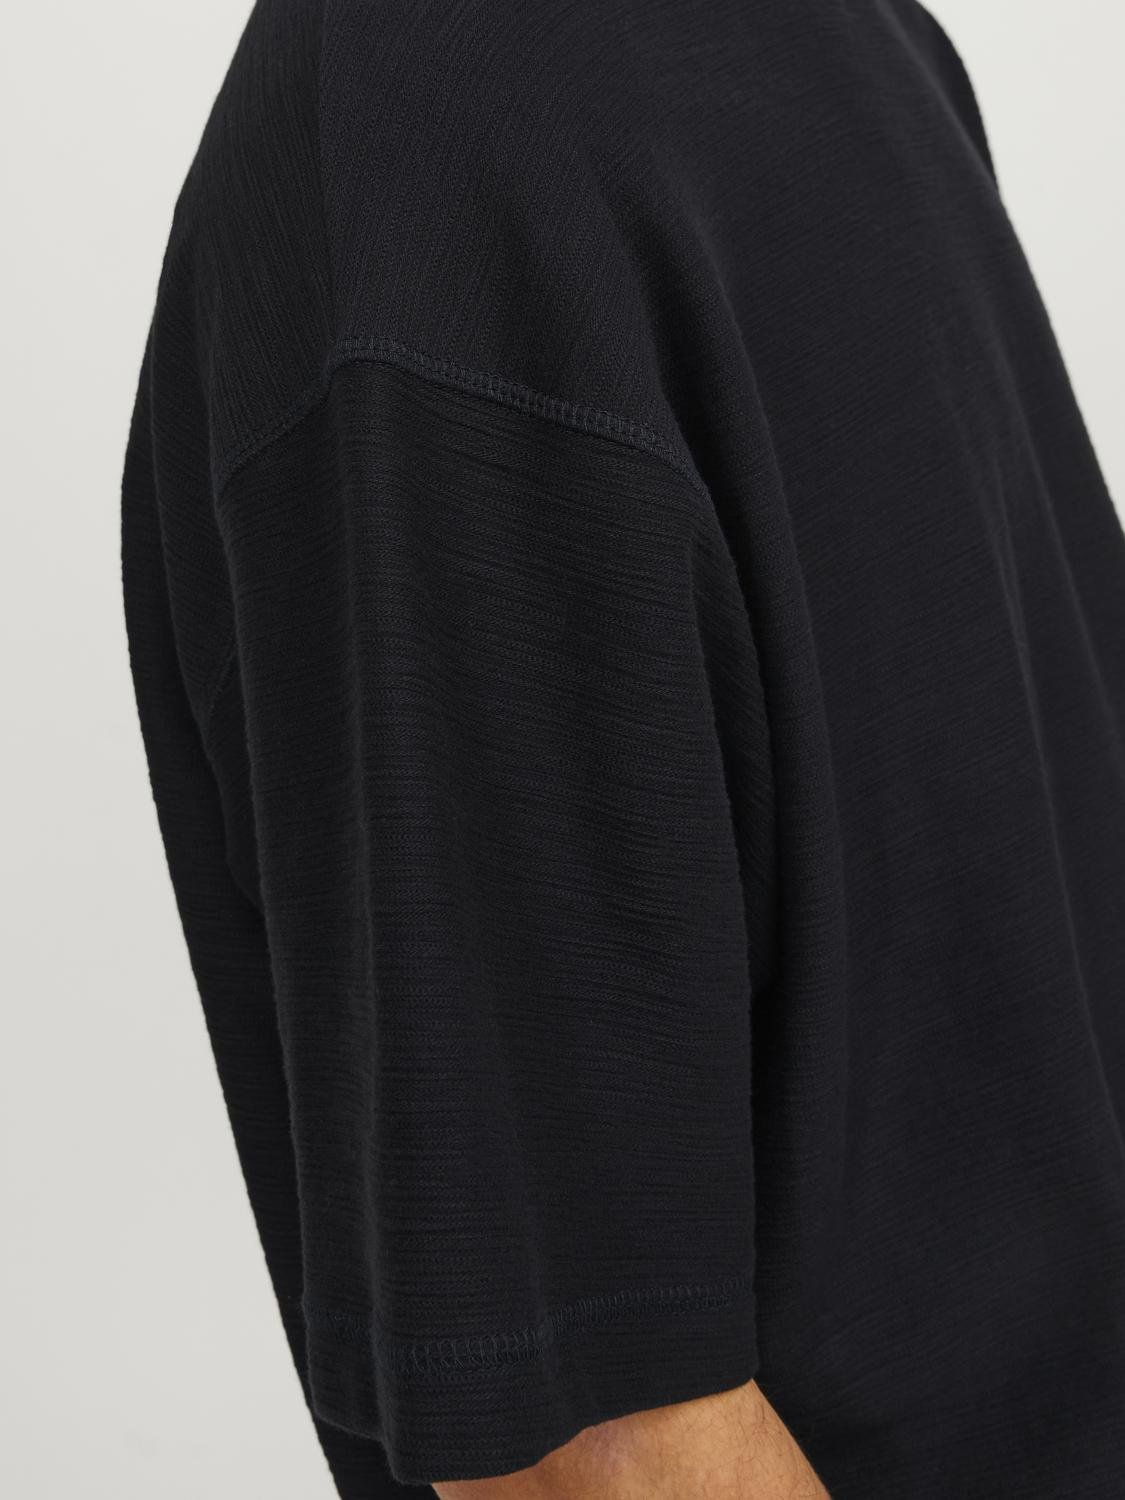 JPRBLARUBERT T-Shirt - Black Onyx